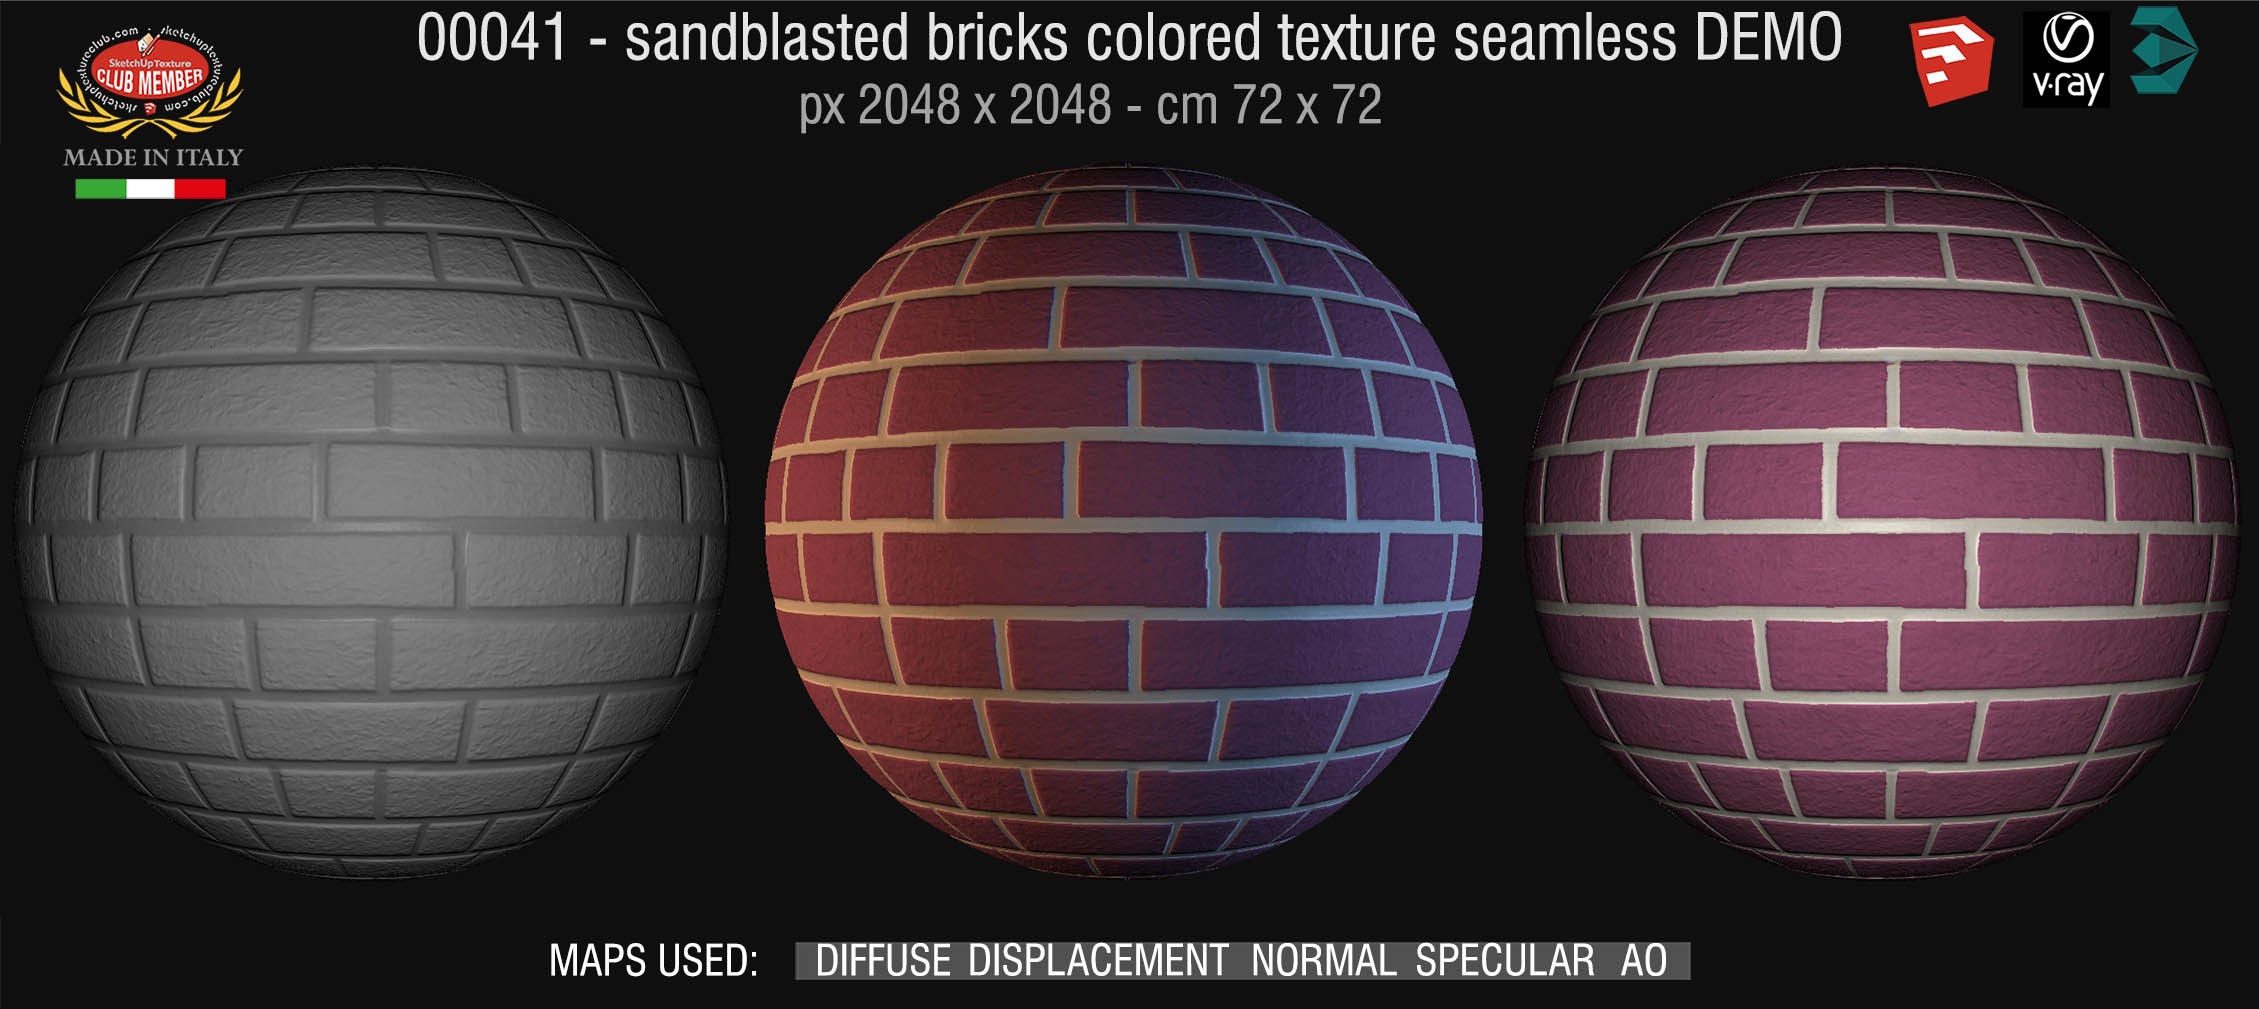 00041 Sandblasted bricks colored texture seamless + maps DEMO